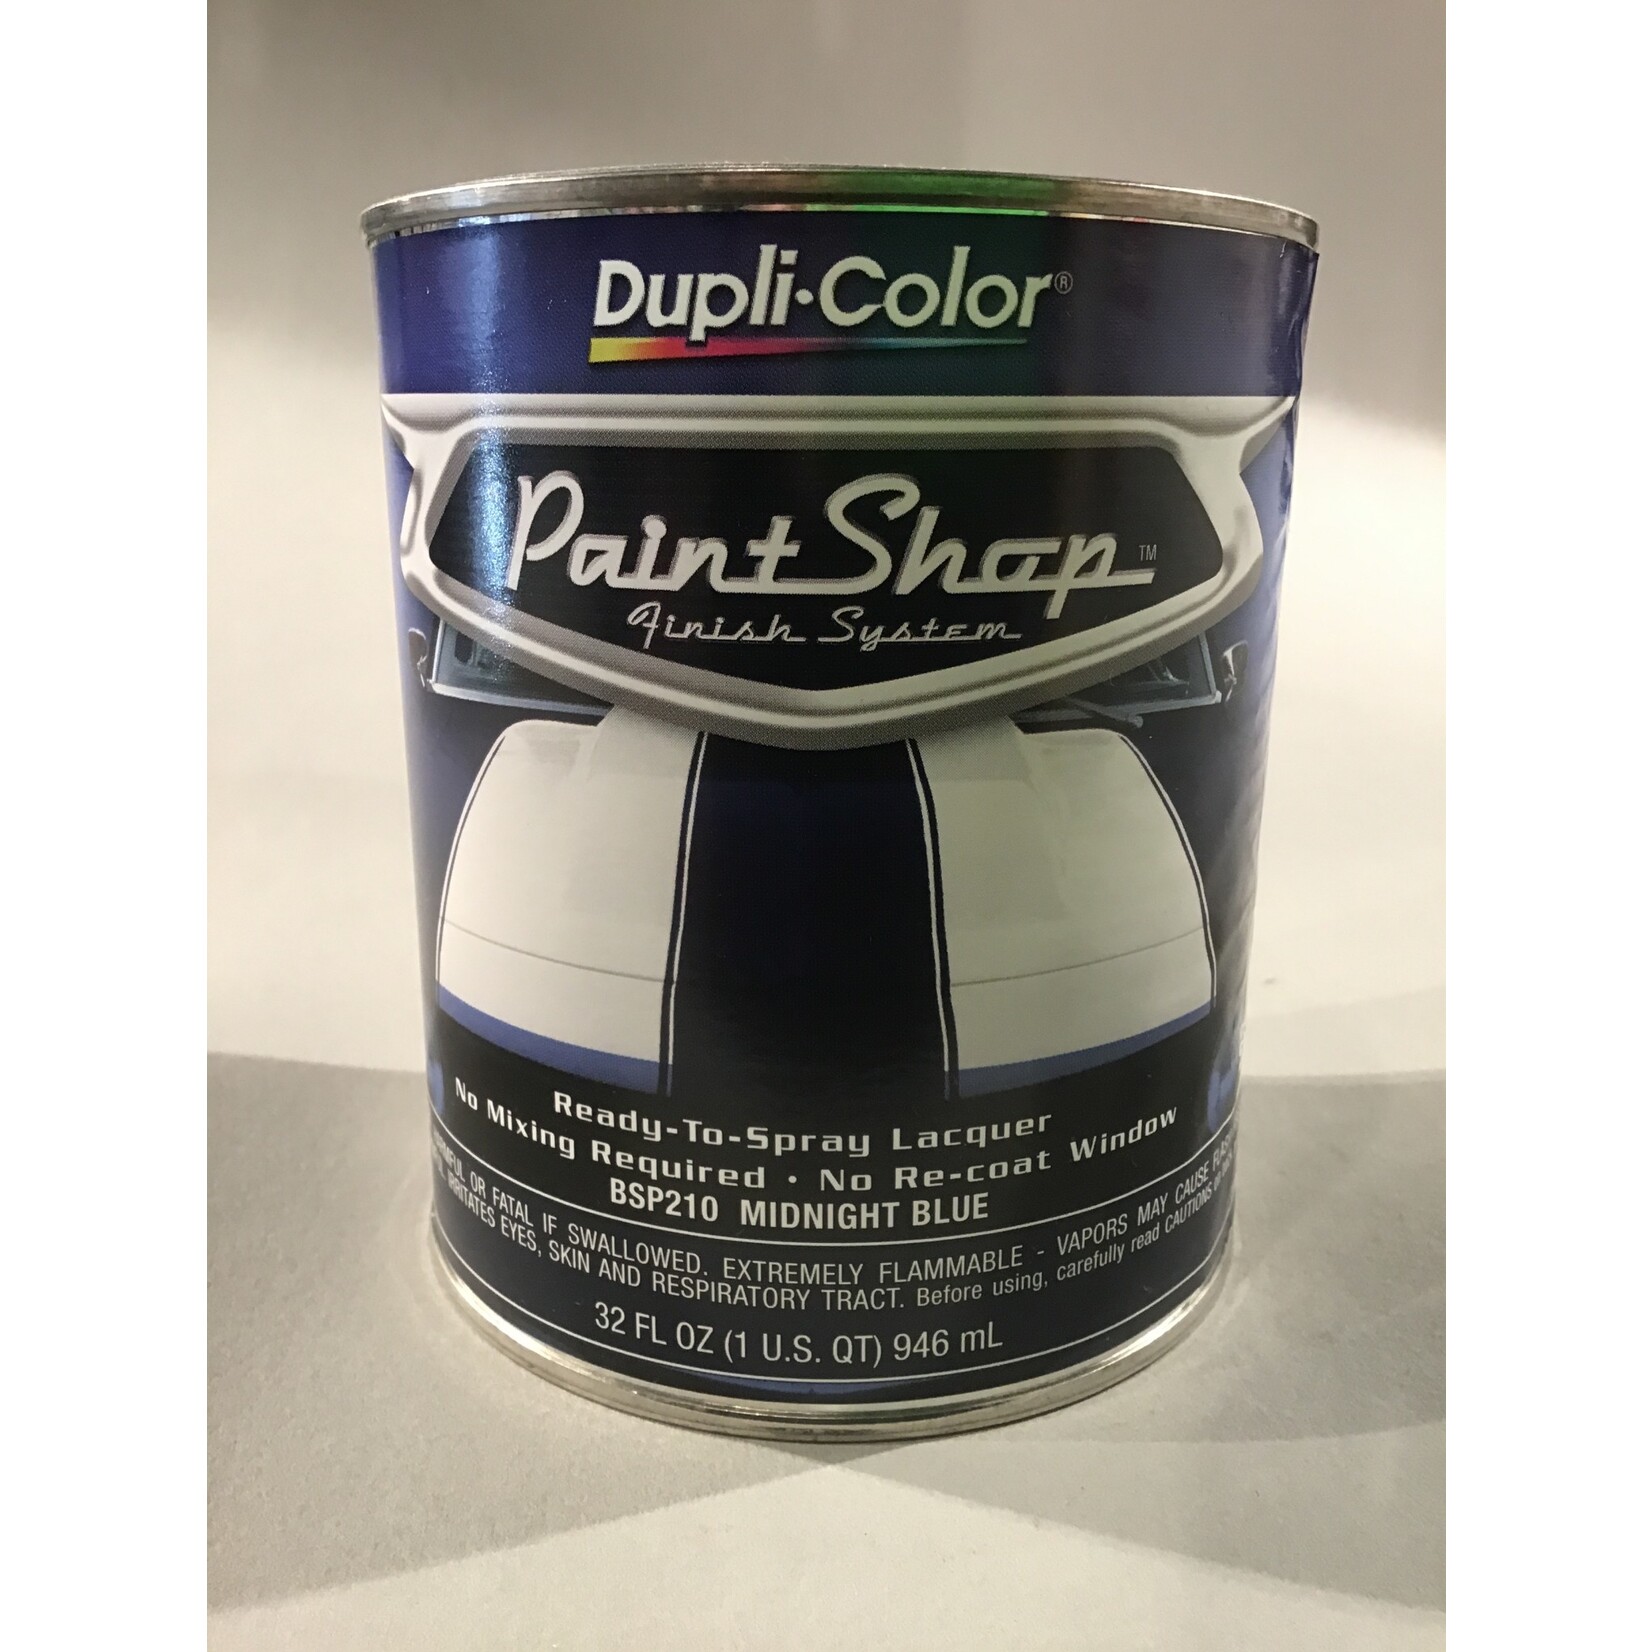 Dupli-Color Paint Shop Finish System - Midnight Blue